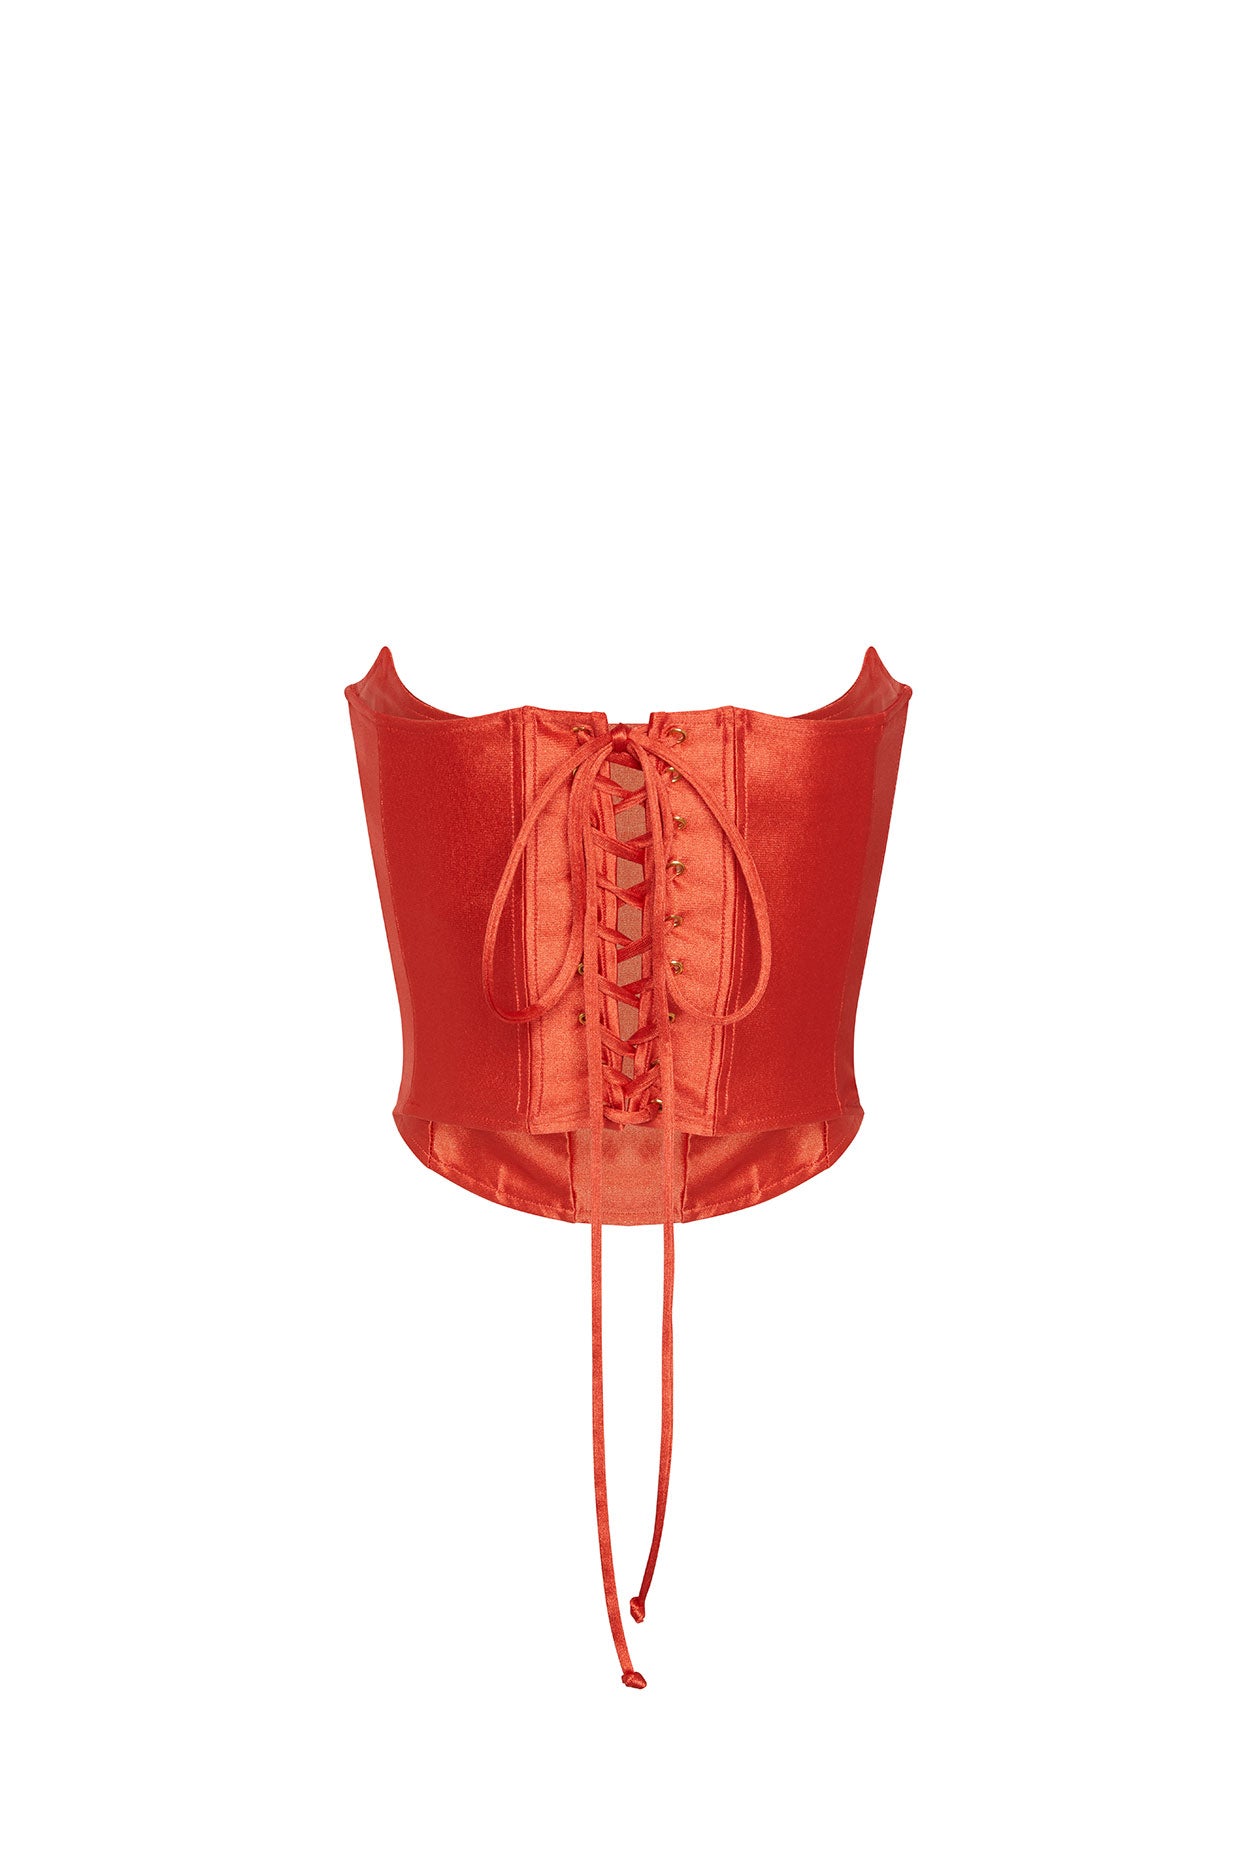 Scarlet star corset Rezek studio, Dress Hire